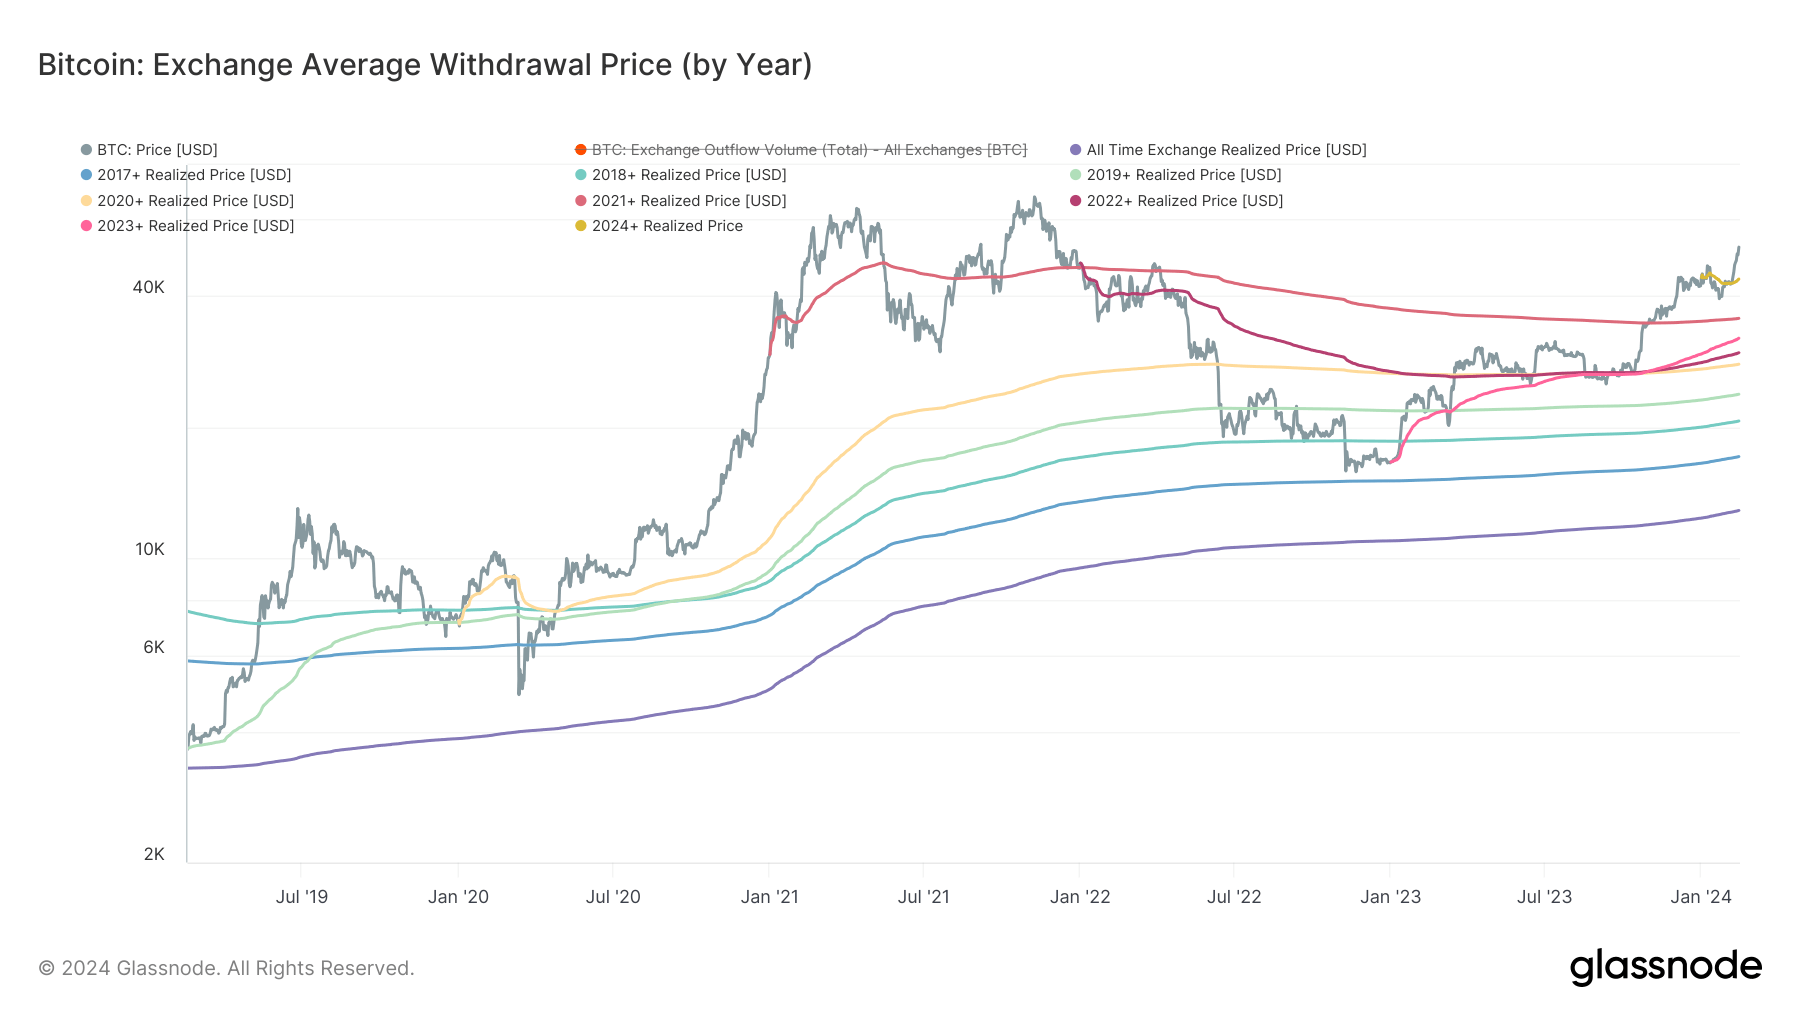 Exchange Average Withdrawal Price: (Source: Glassnode)